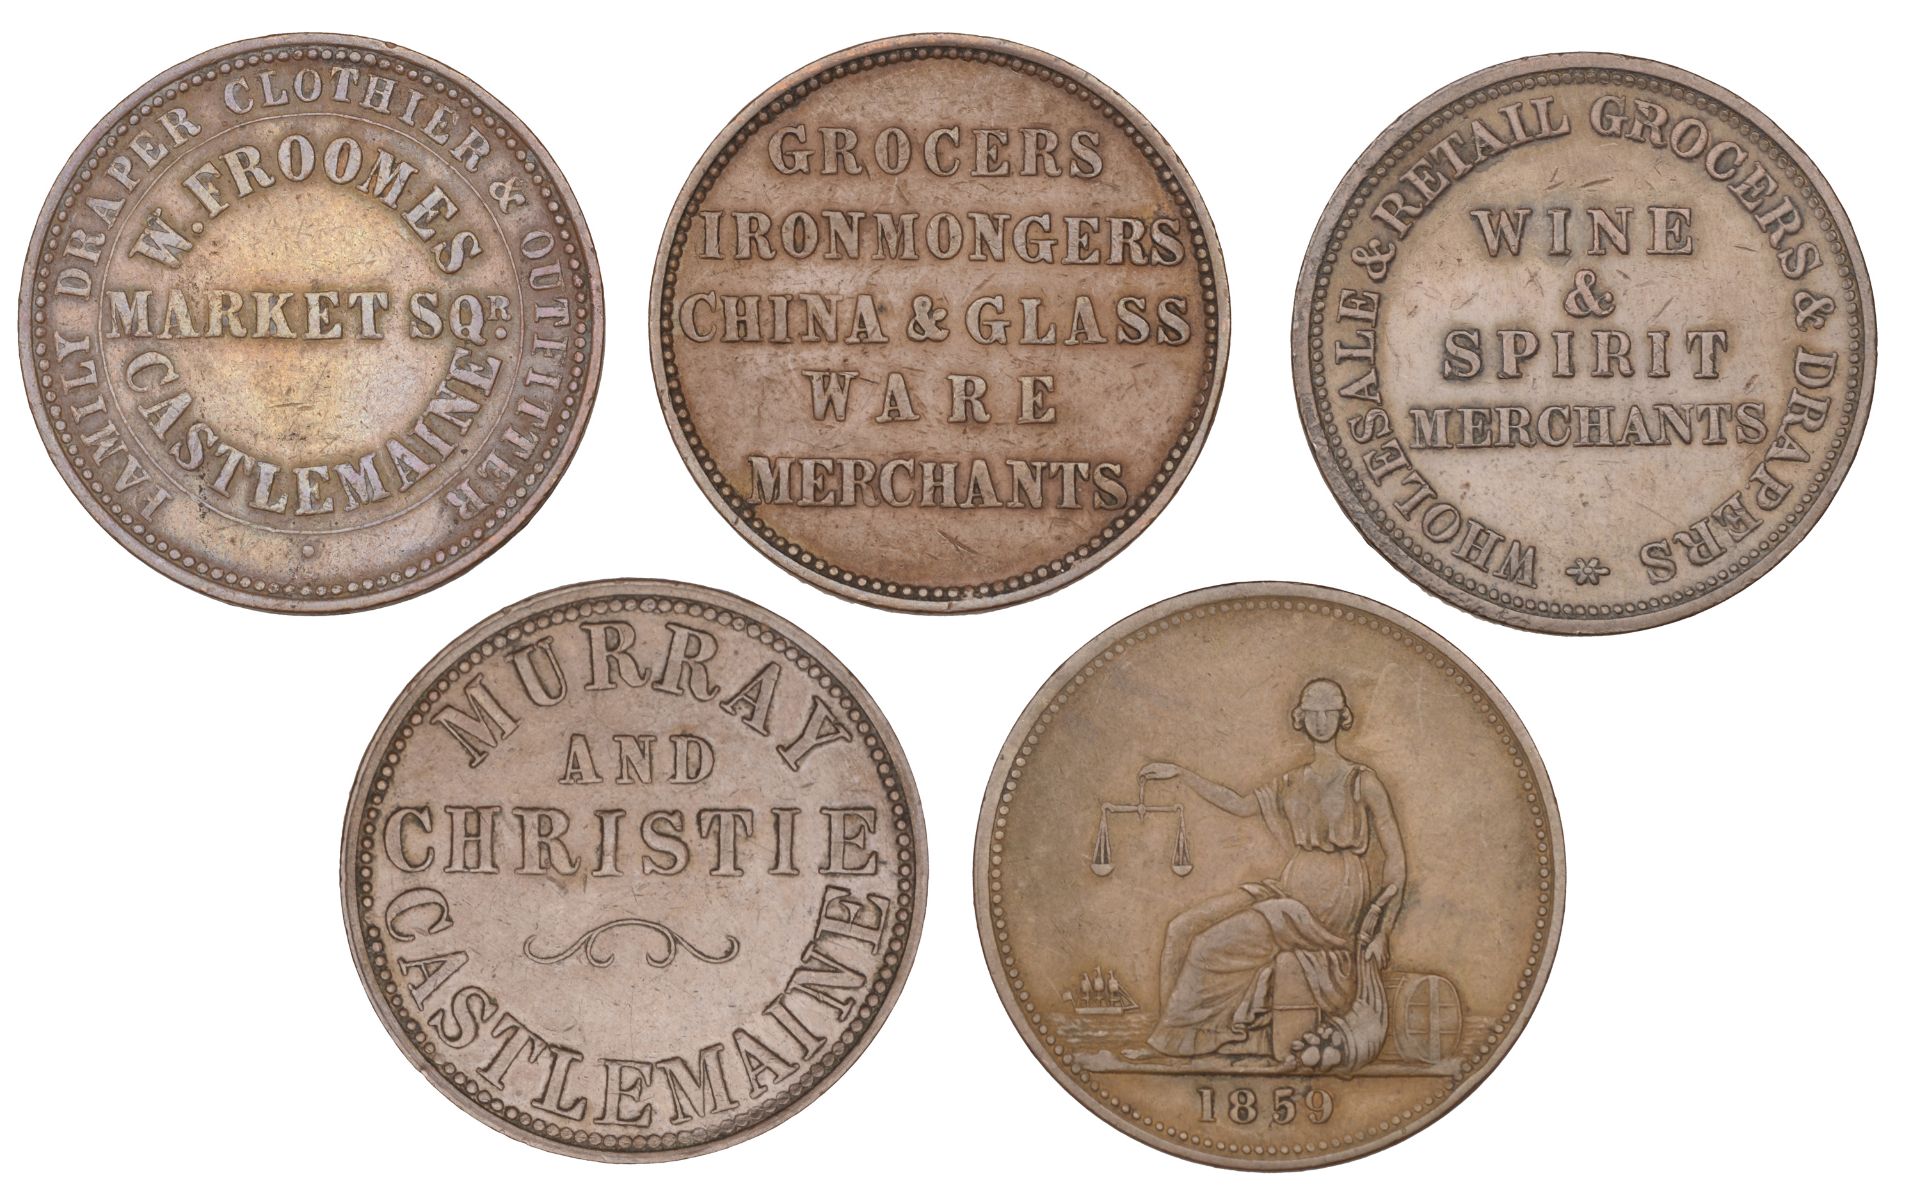 Australia, Victoria, CASTLEMAINE, T. Butterworth & Co., Pennies (2), undated, 1859 (G 34, 35... - Image 2 of 2